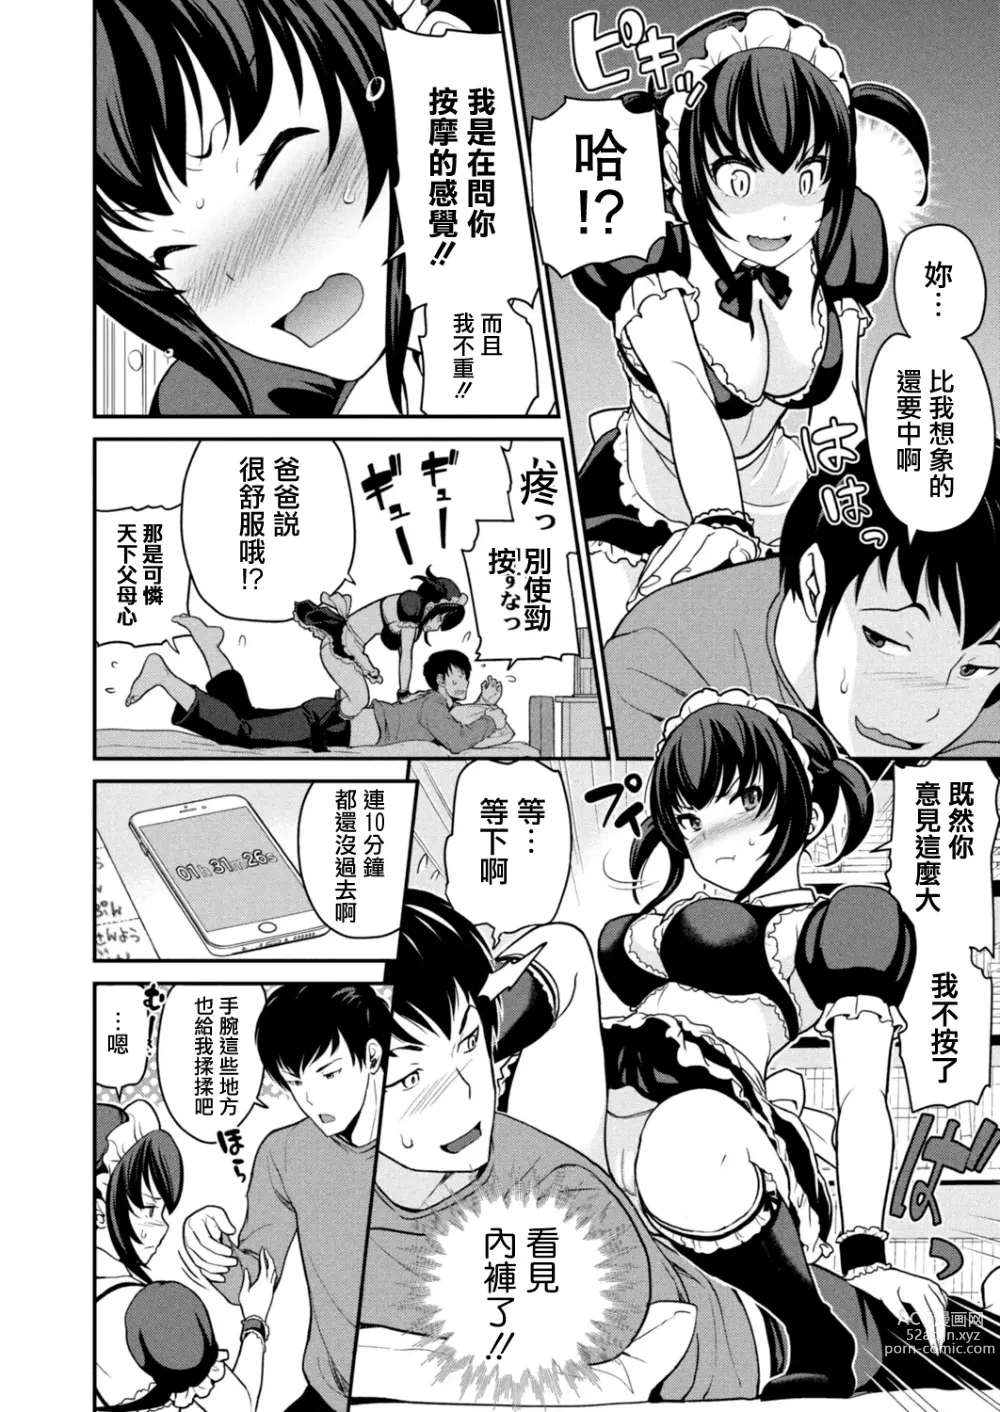 Page 4 of manga Imouto Scandal Ch. 4 Mei